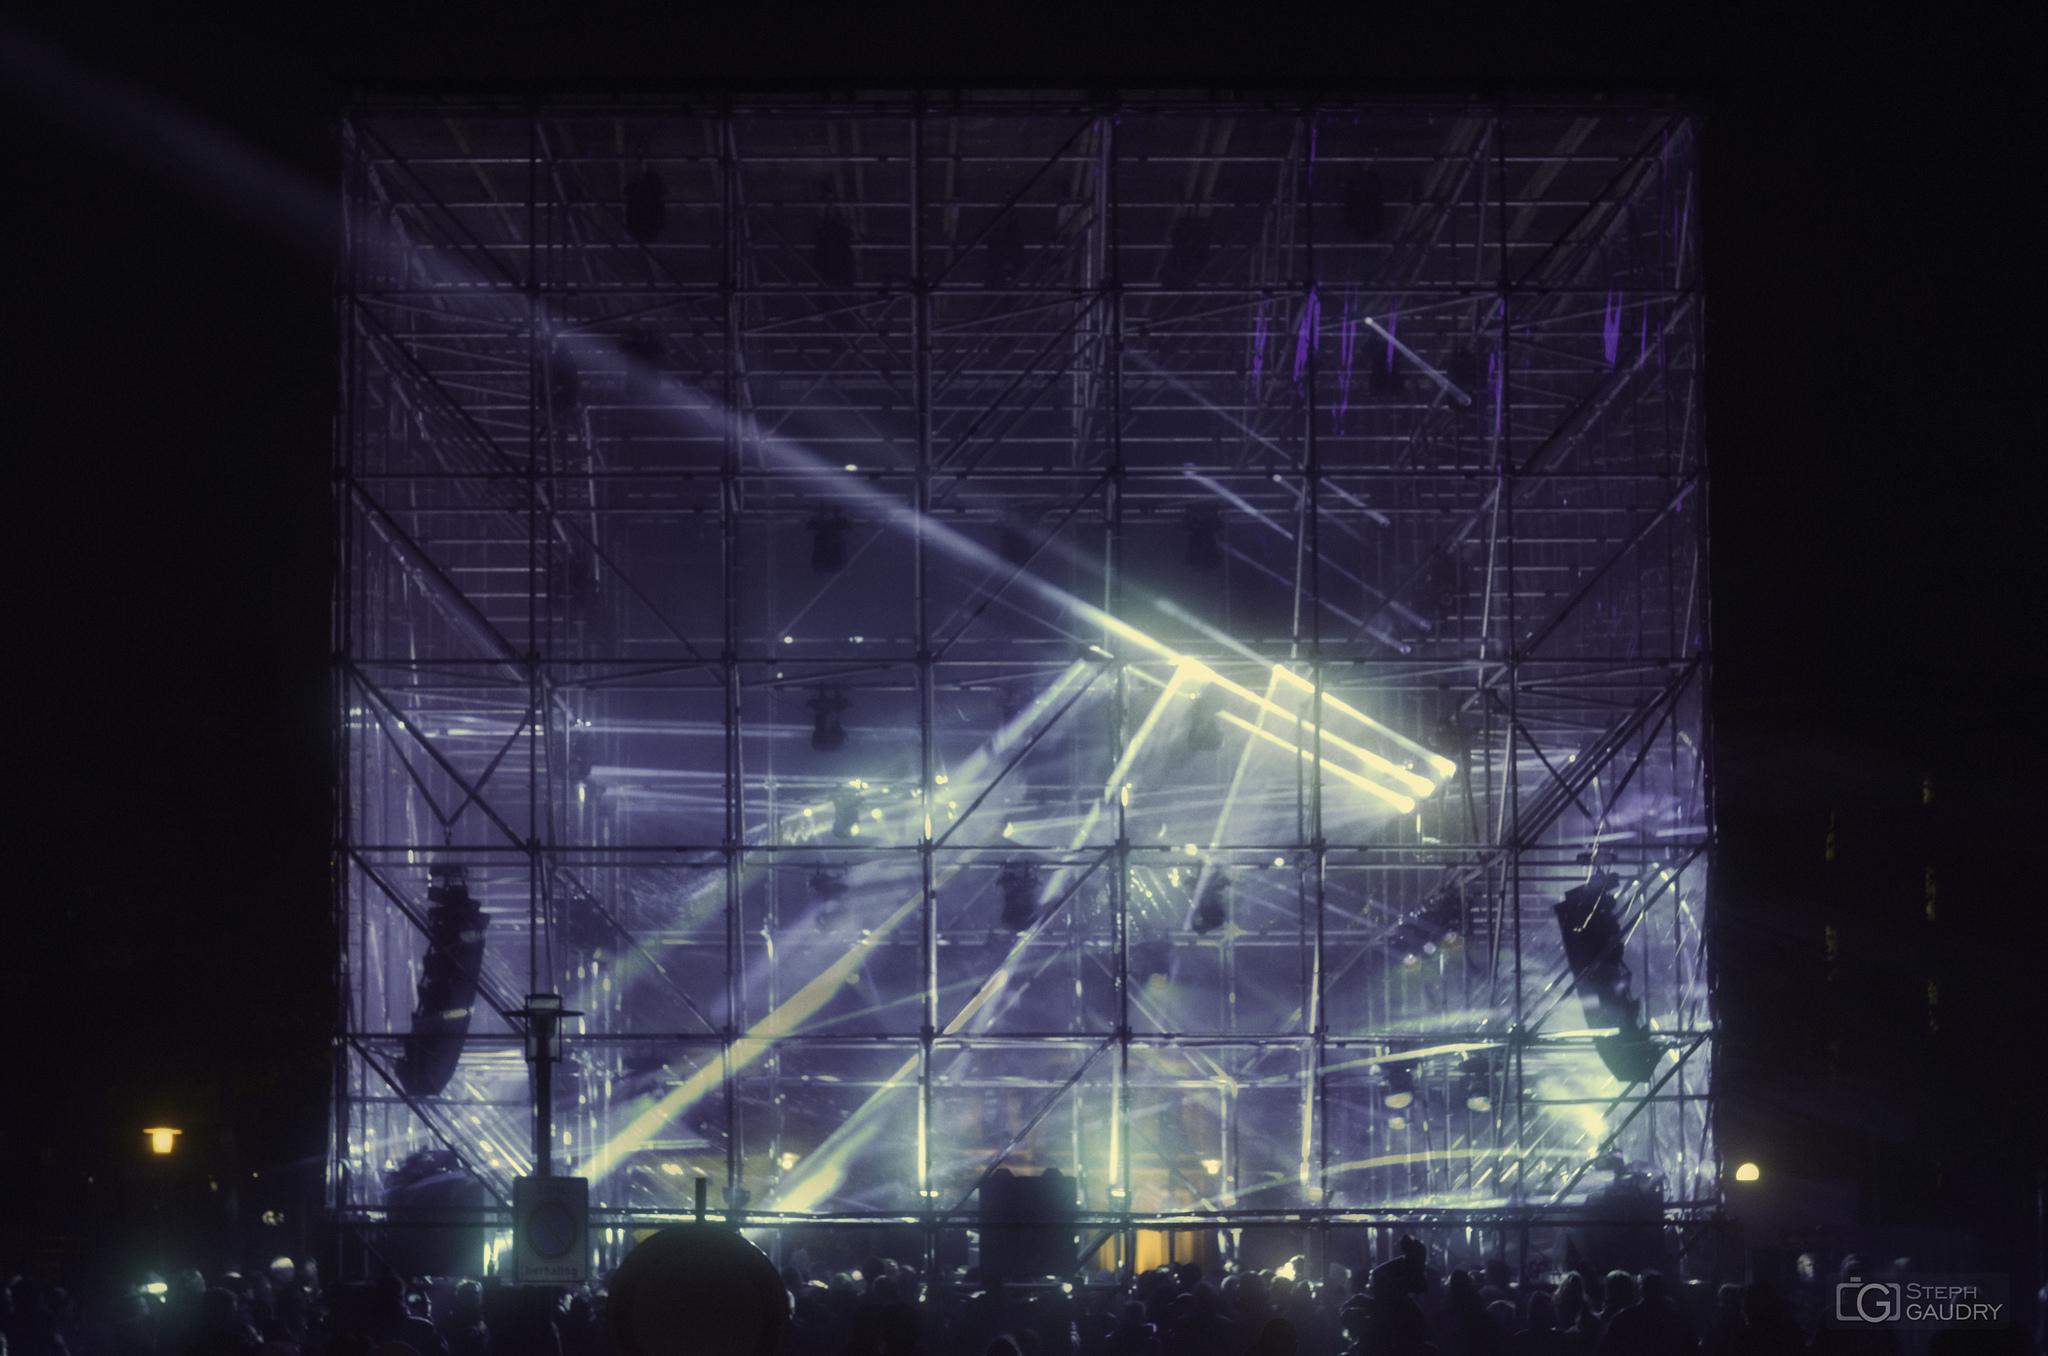 Eindhoven glow 2013 - Tesseract [Cliquez pour lancer le diaporama]